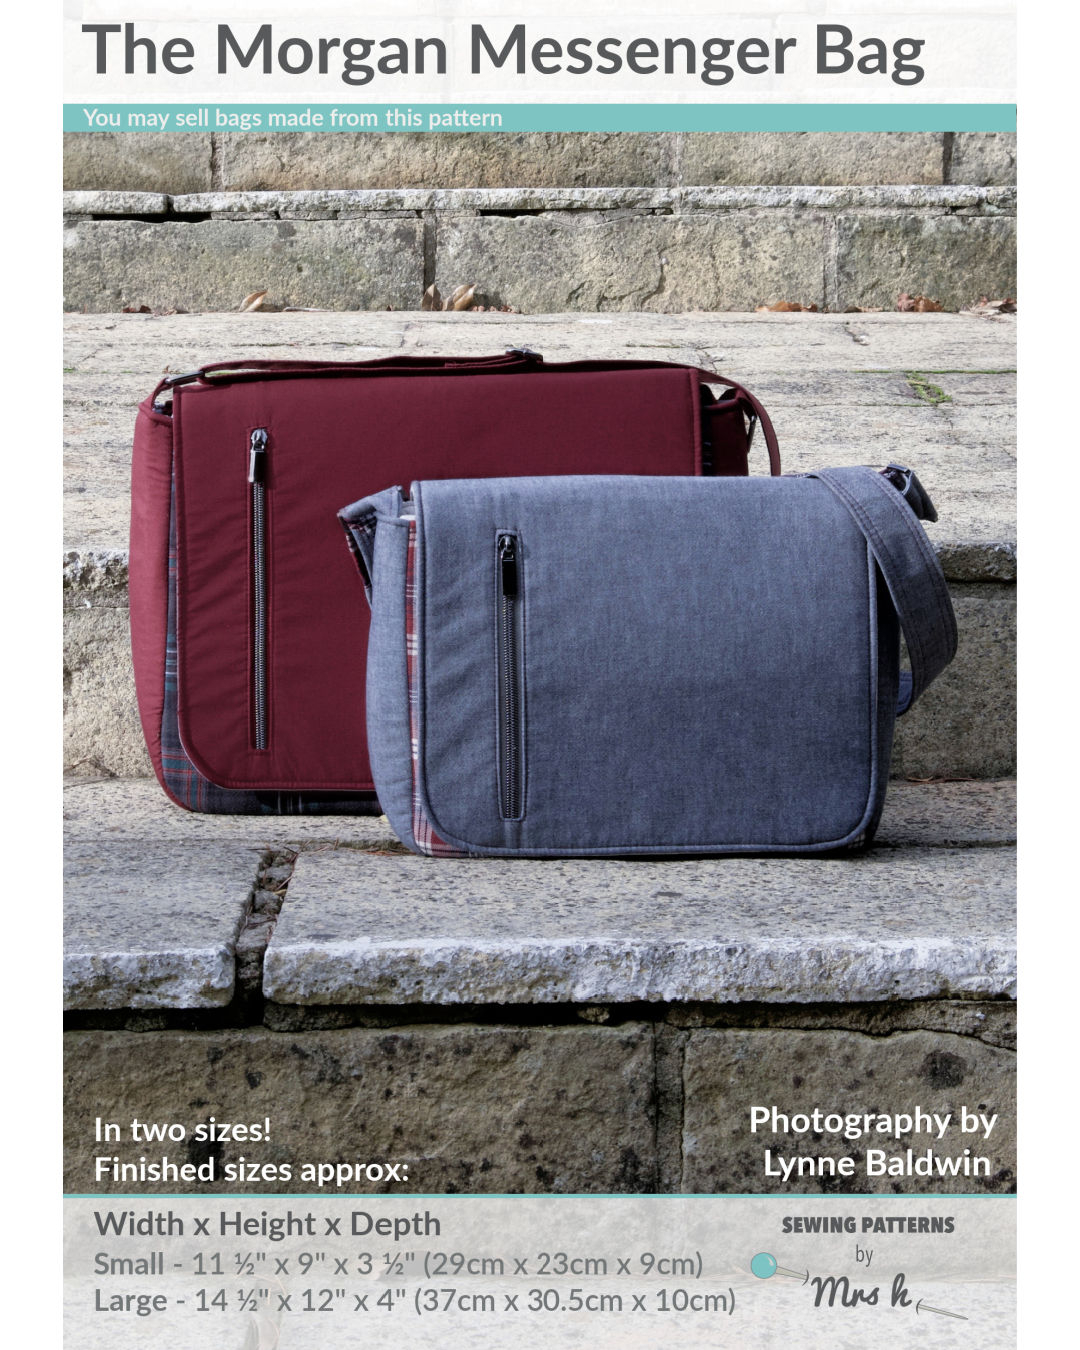 The Morgan Messenger Bag cover image